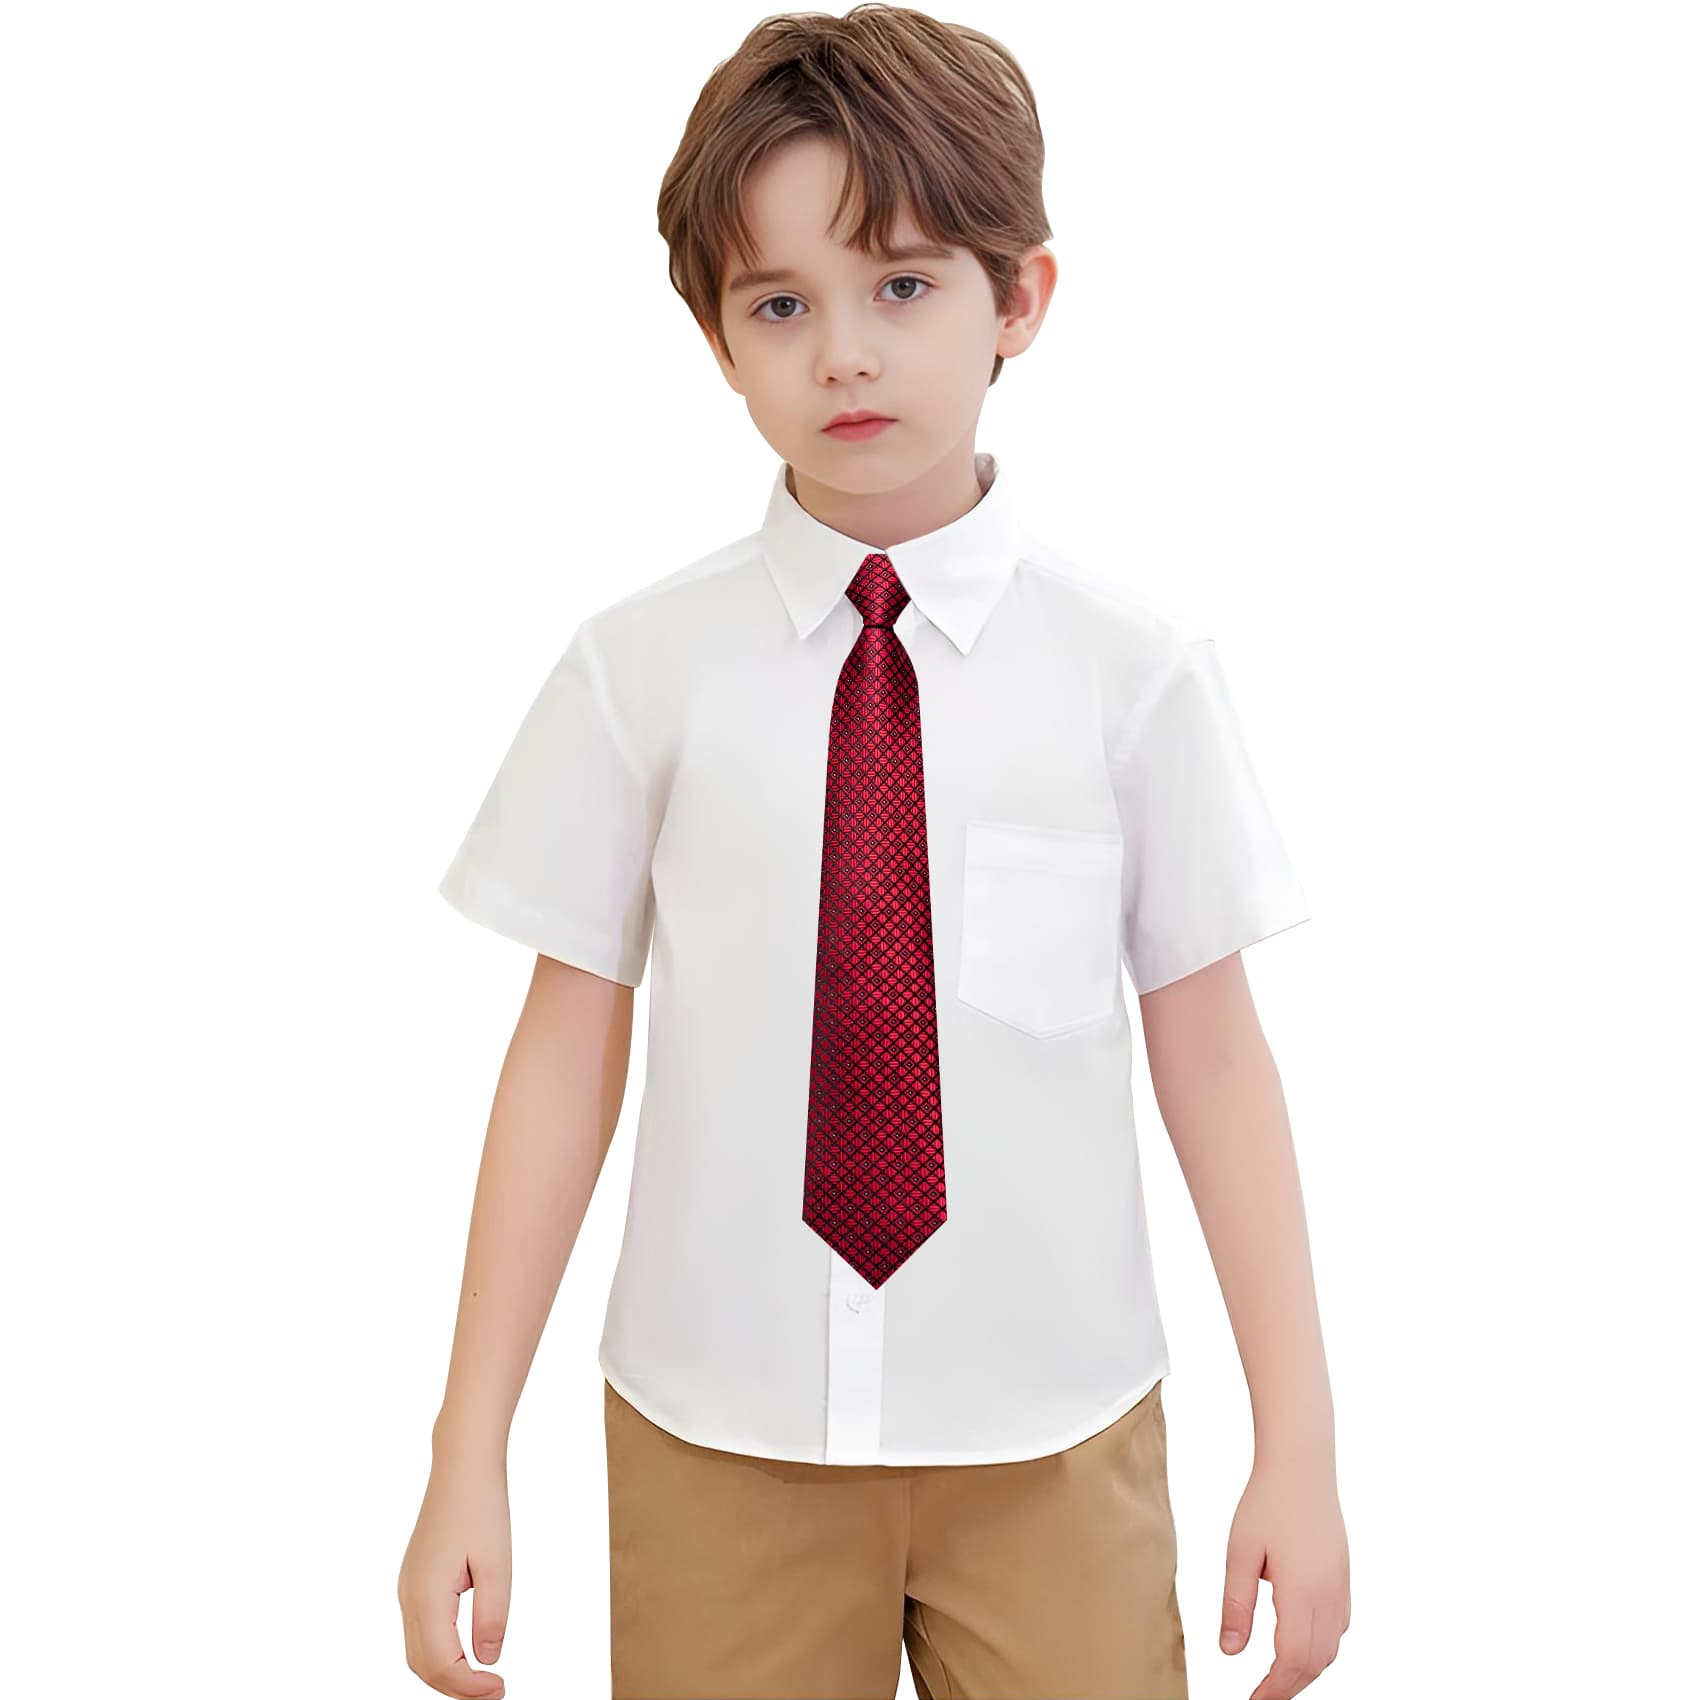 Hi-Tie Red Plaid Children's Kids Boys Tie Pocket Square 6cm